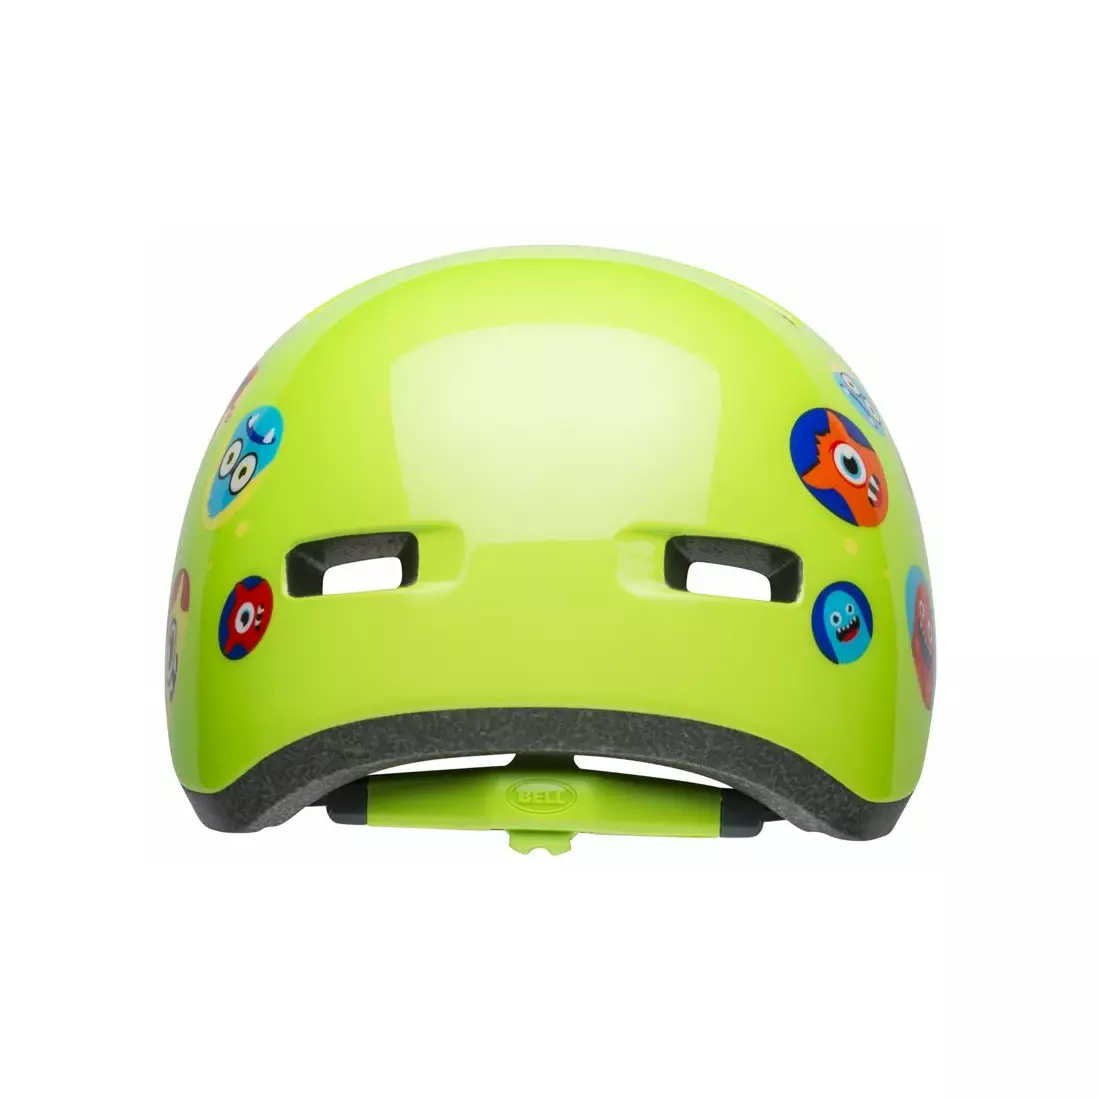 BELL LIL RIPPER Dětská cyklistická helma, monsters gloss green